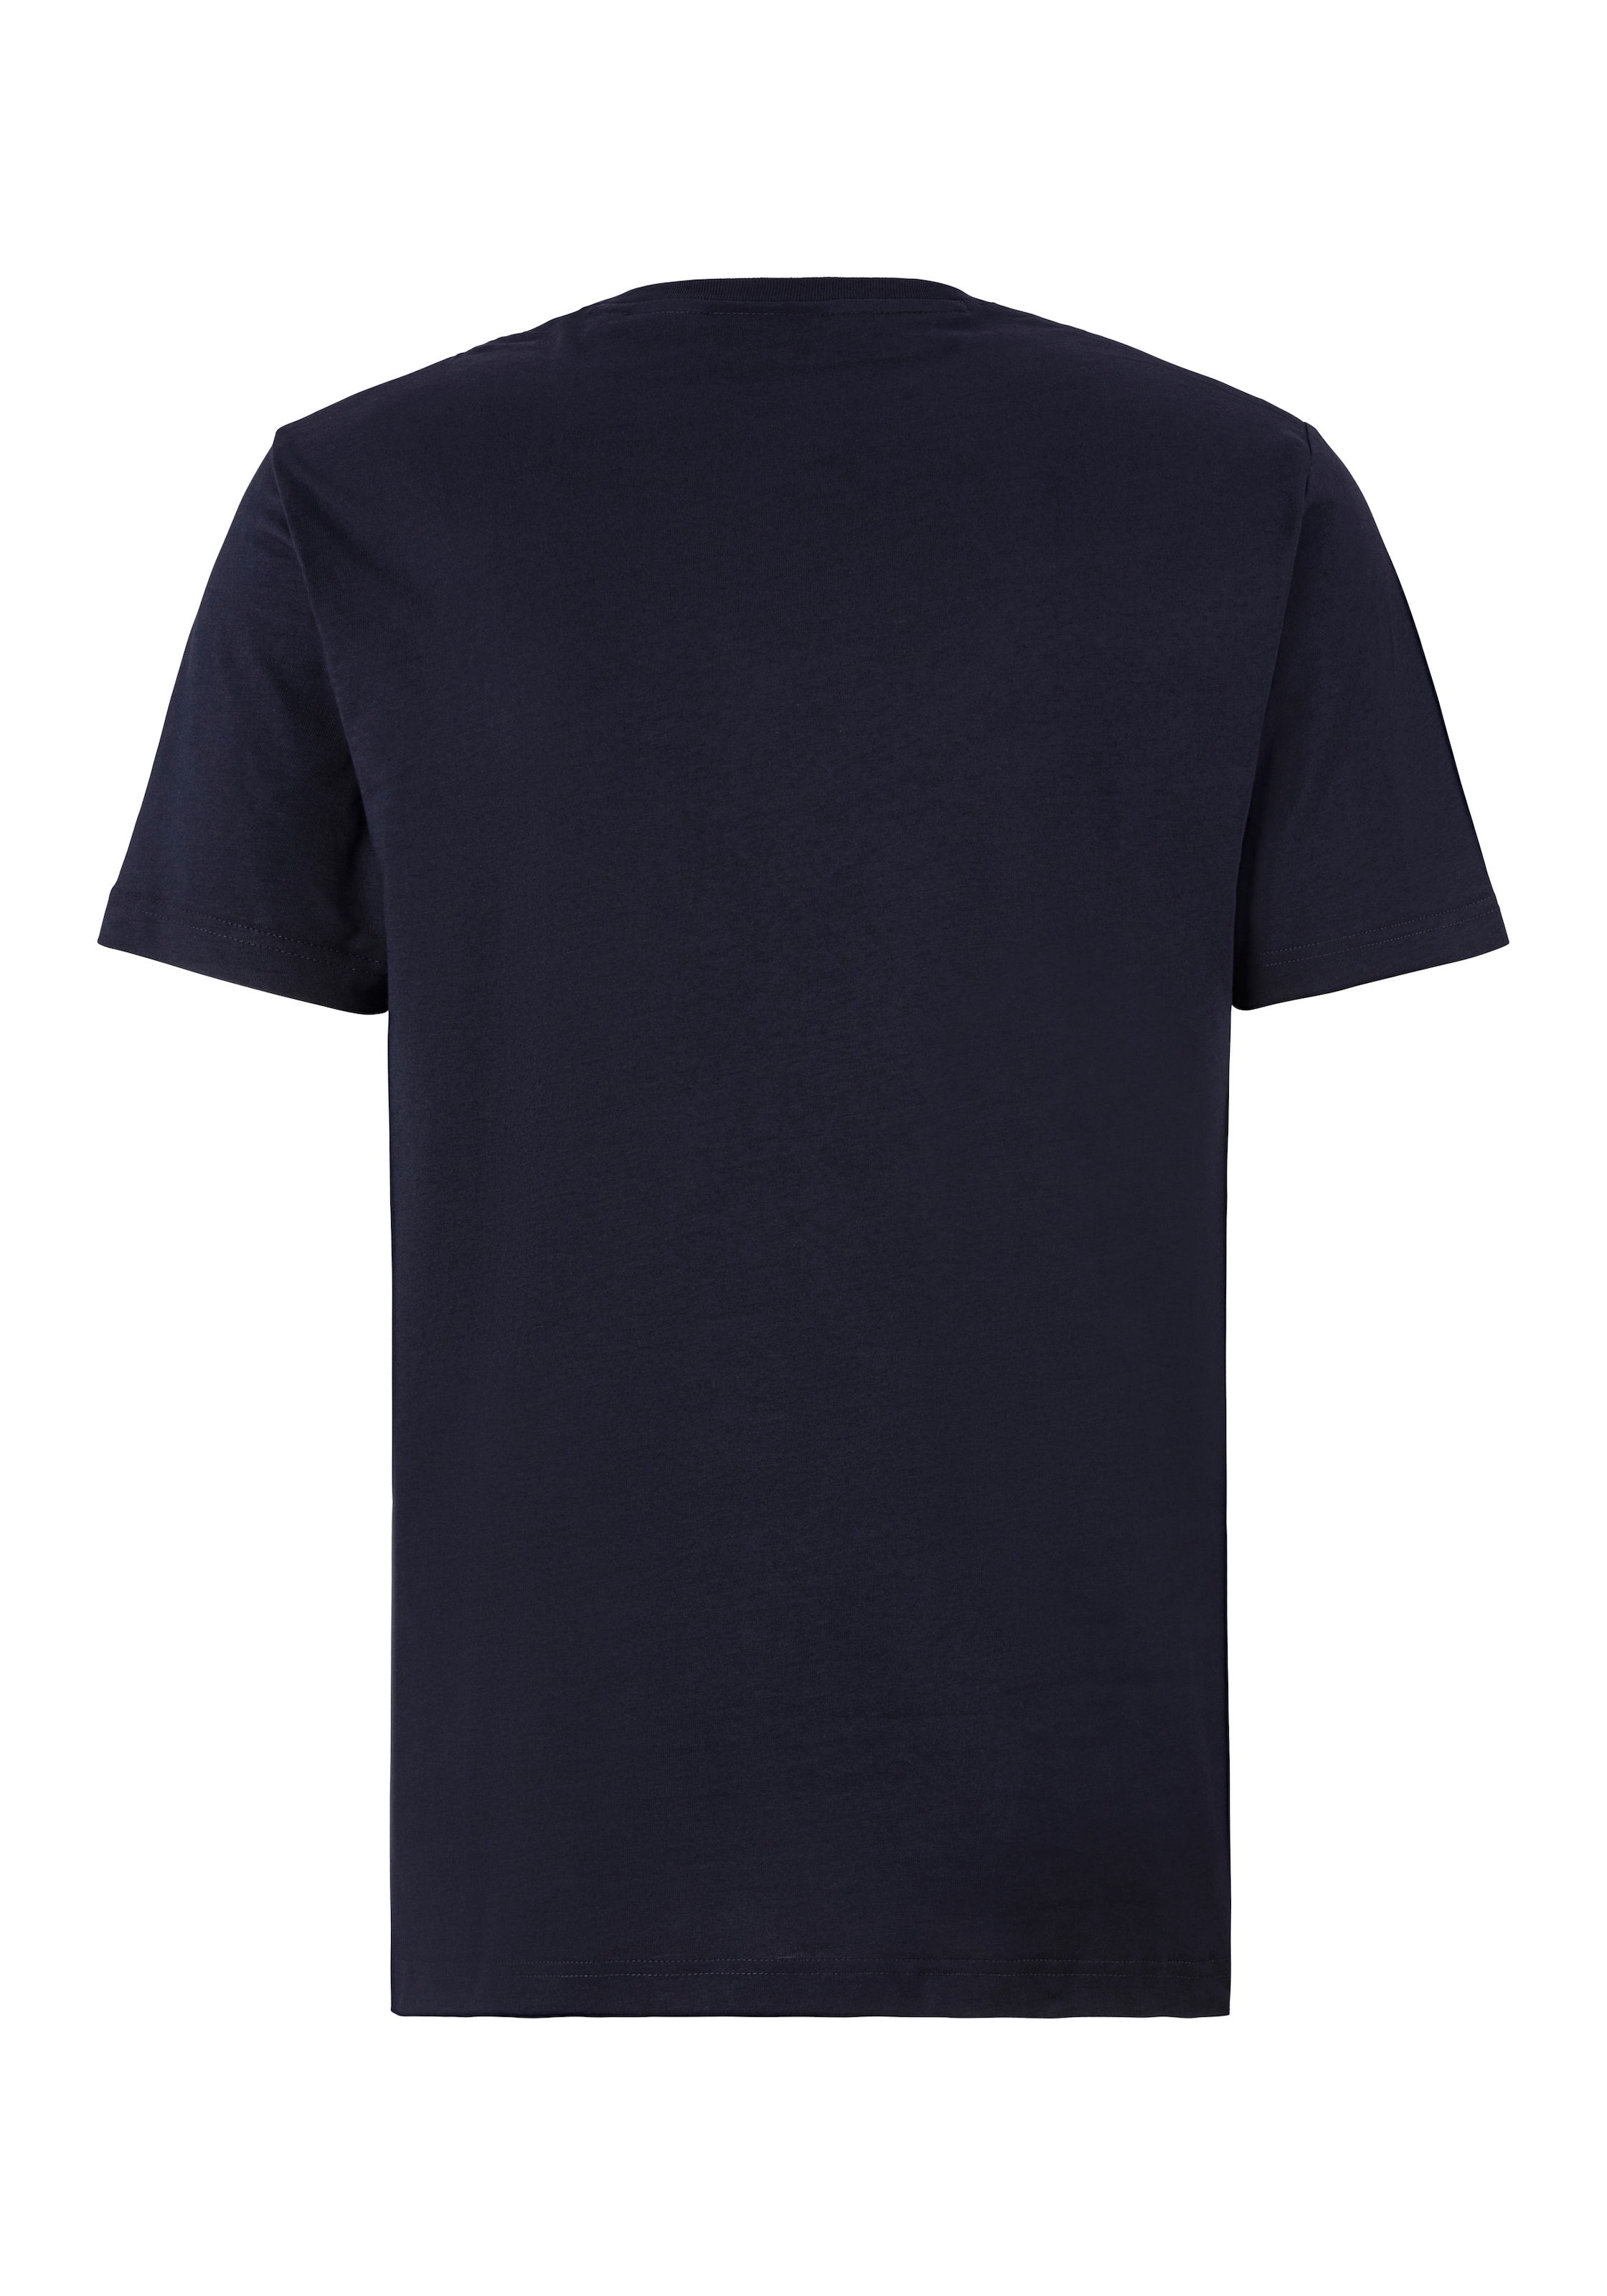 Gant T-Shirt »LOGO SS T-SHIRT«, Kontrastfarbener Print